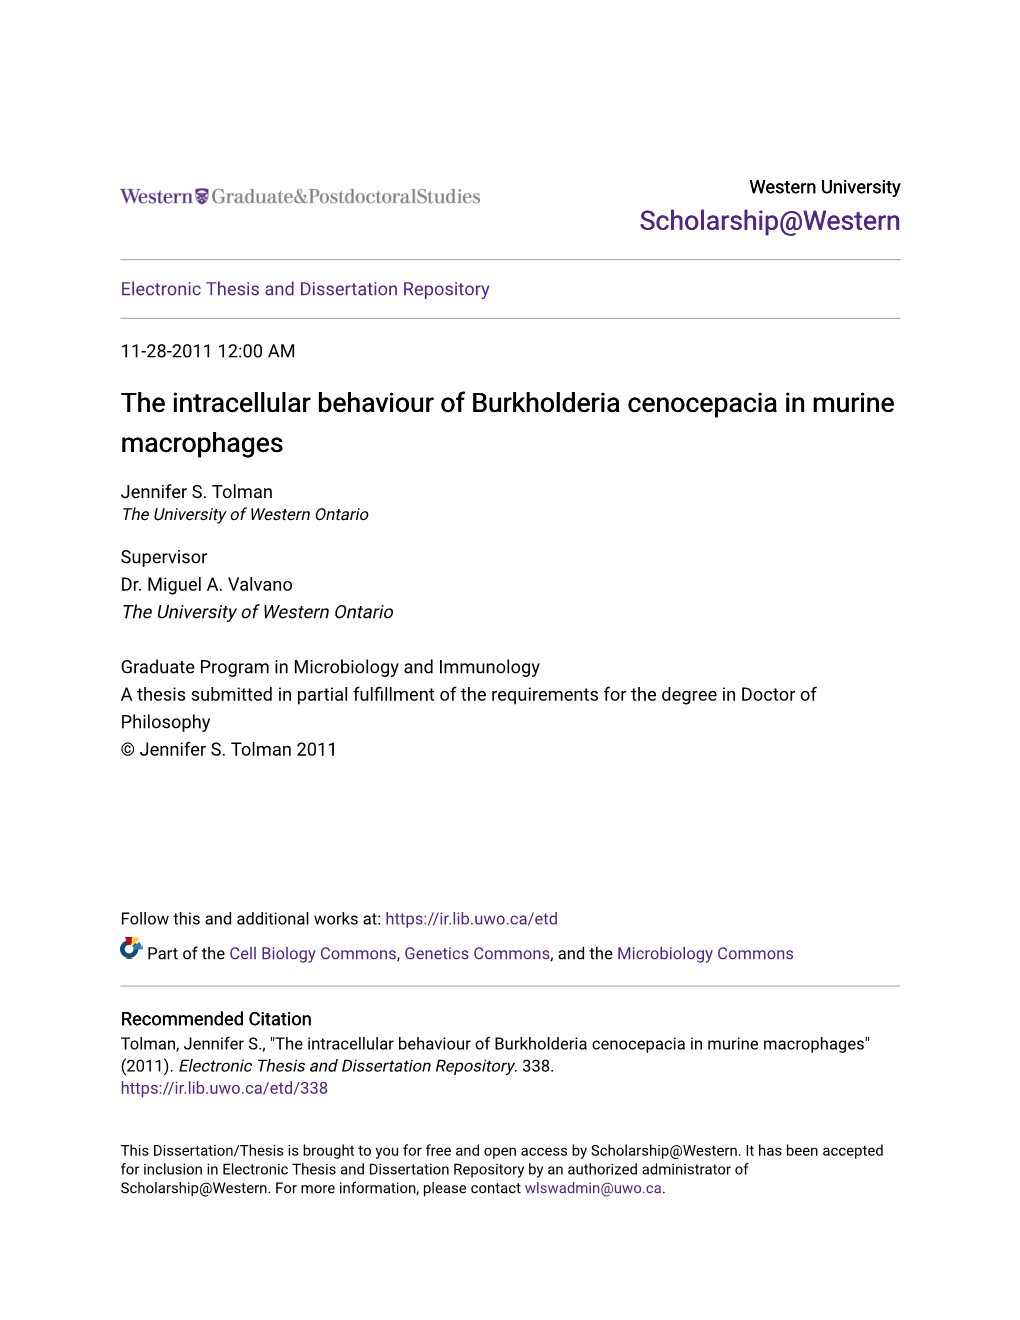 The Intracellular Behaviour of Burkholderia Cenocepacia in Murine Macrophages